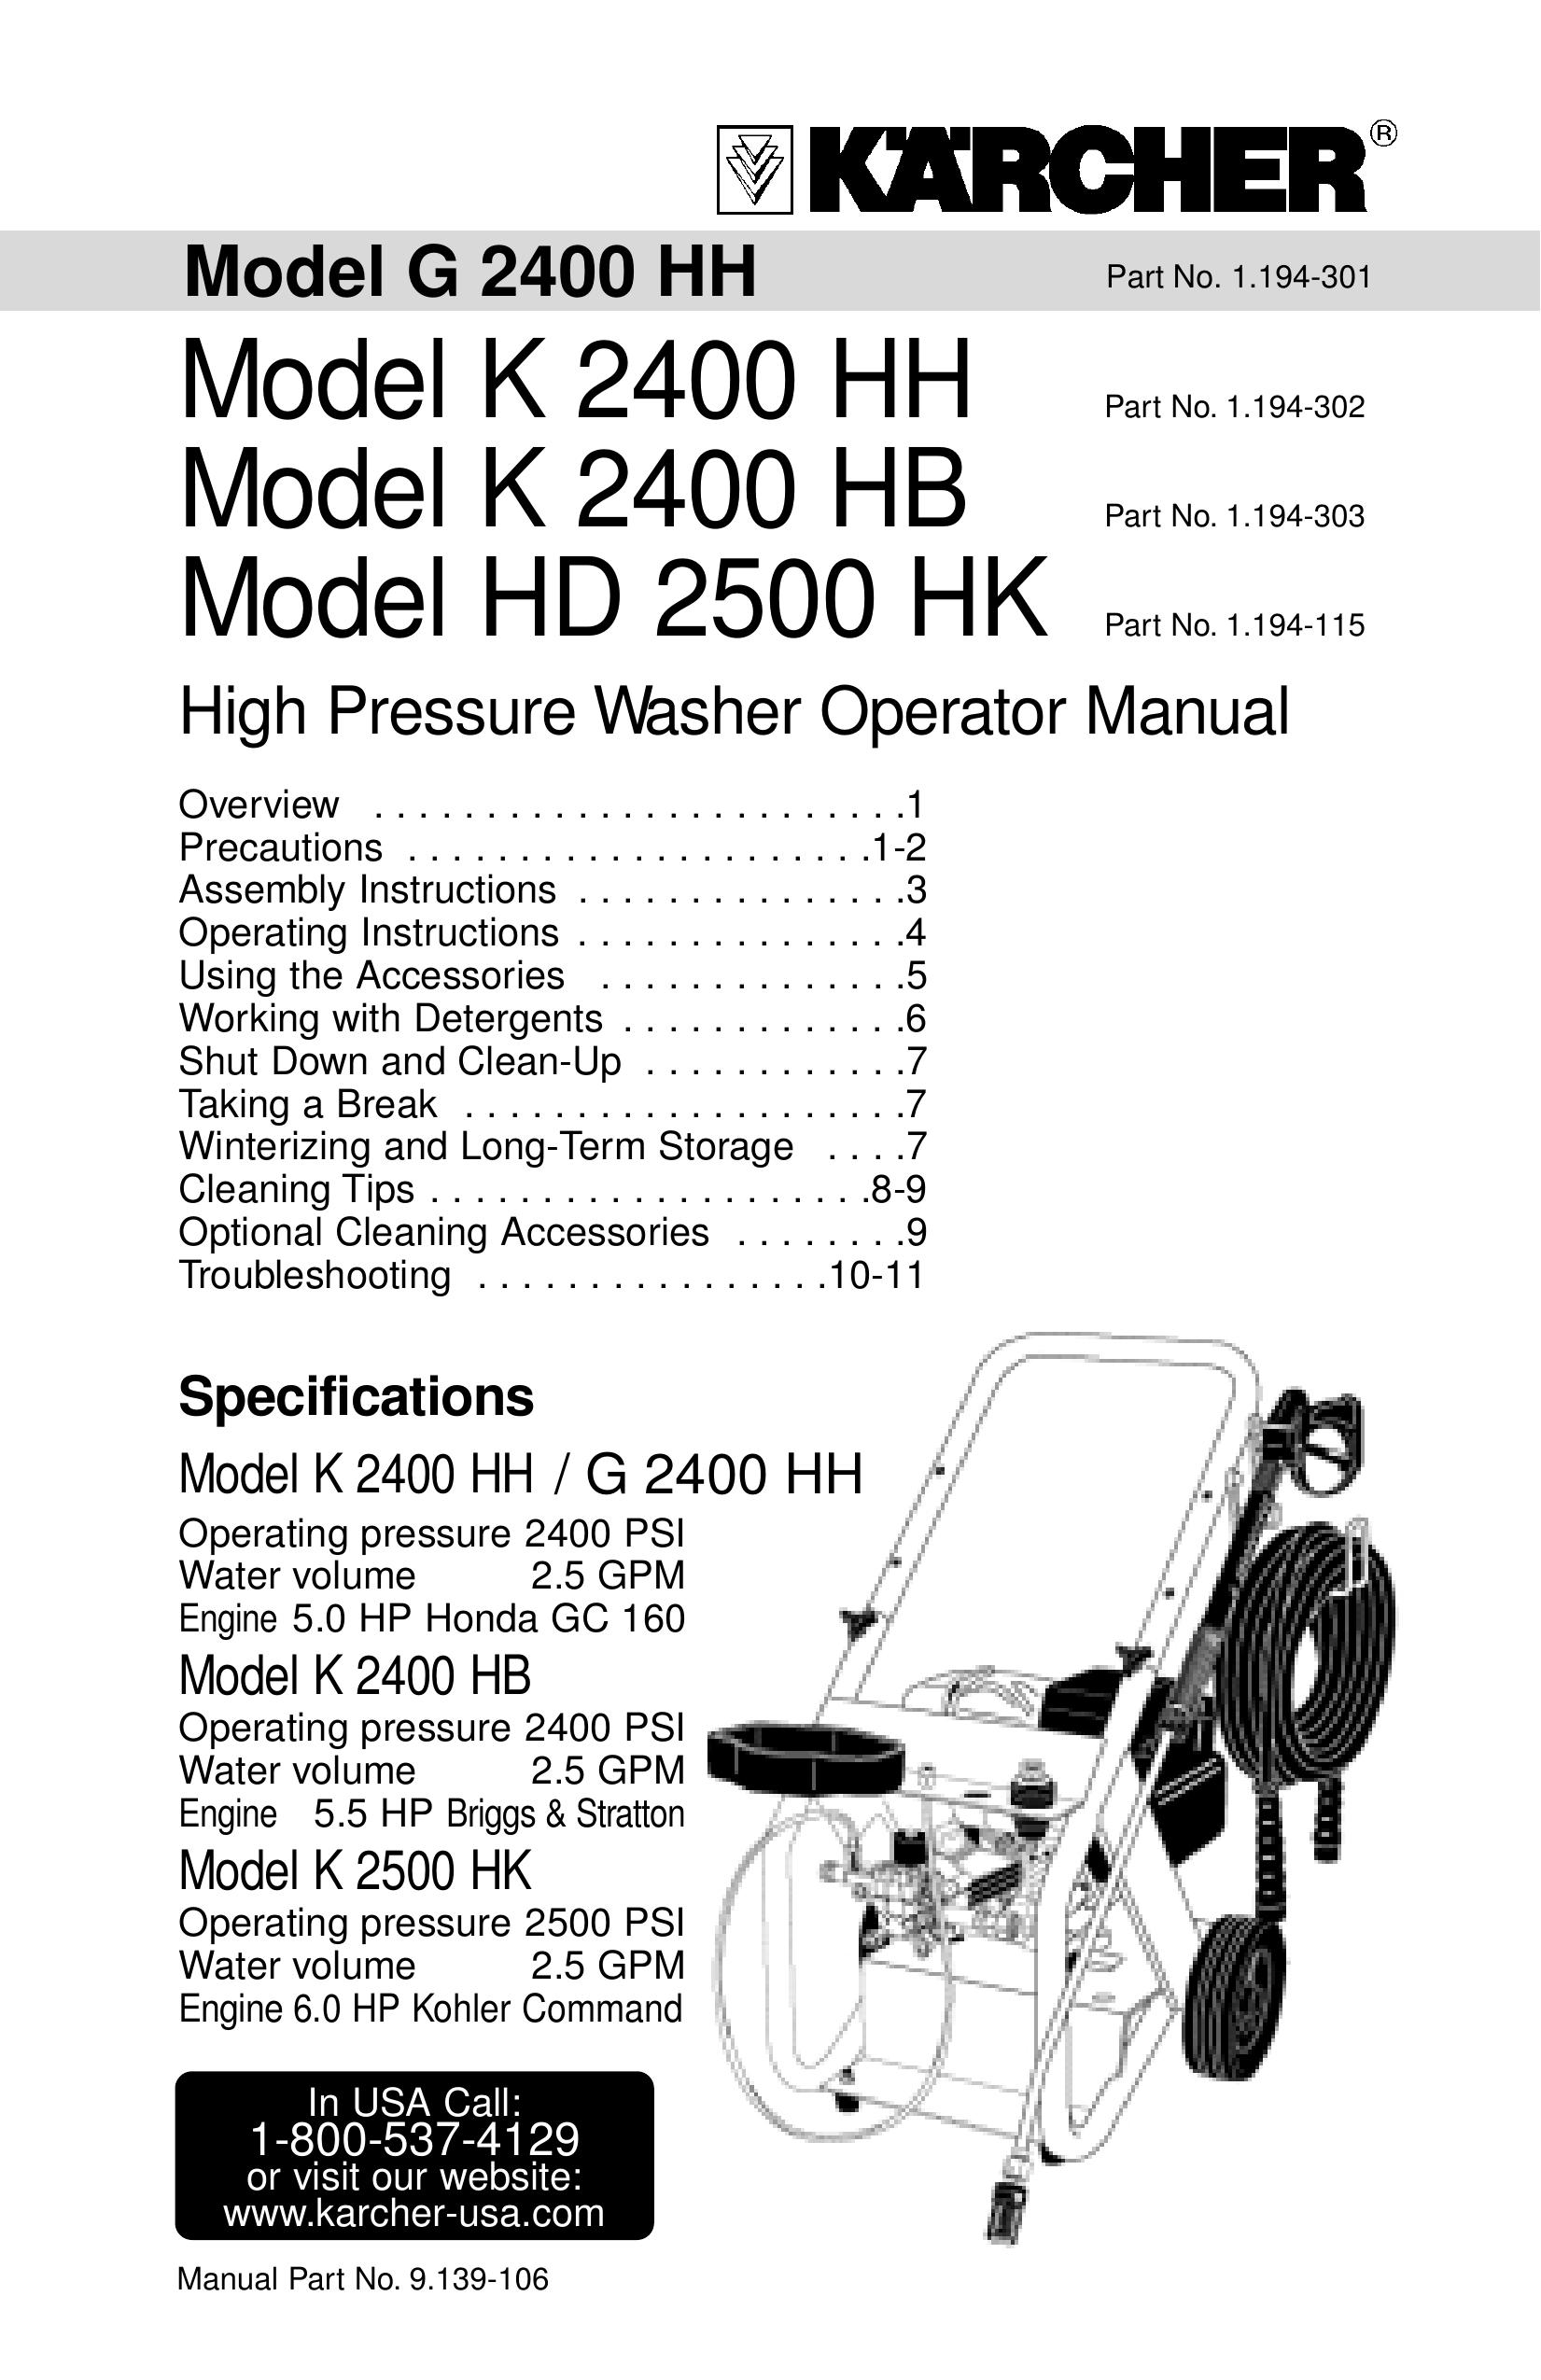 Karcher G 2400 HH Pressure Washer User Manual